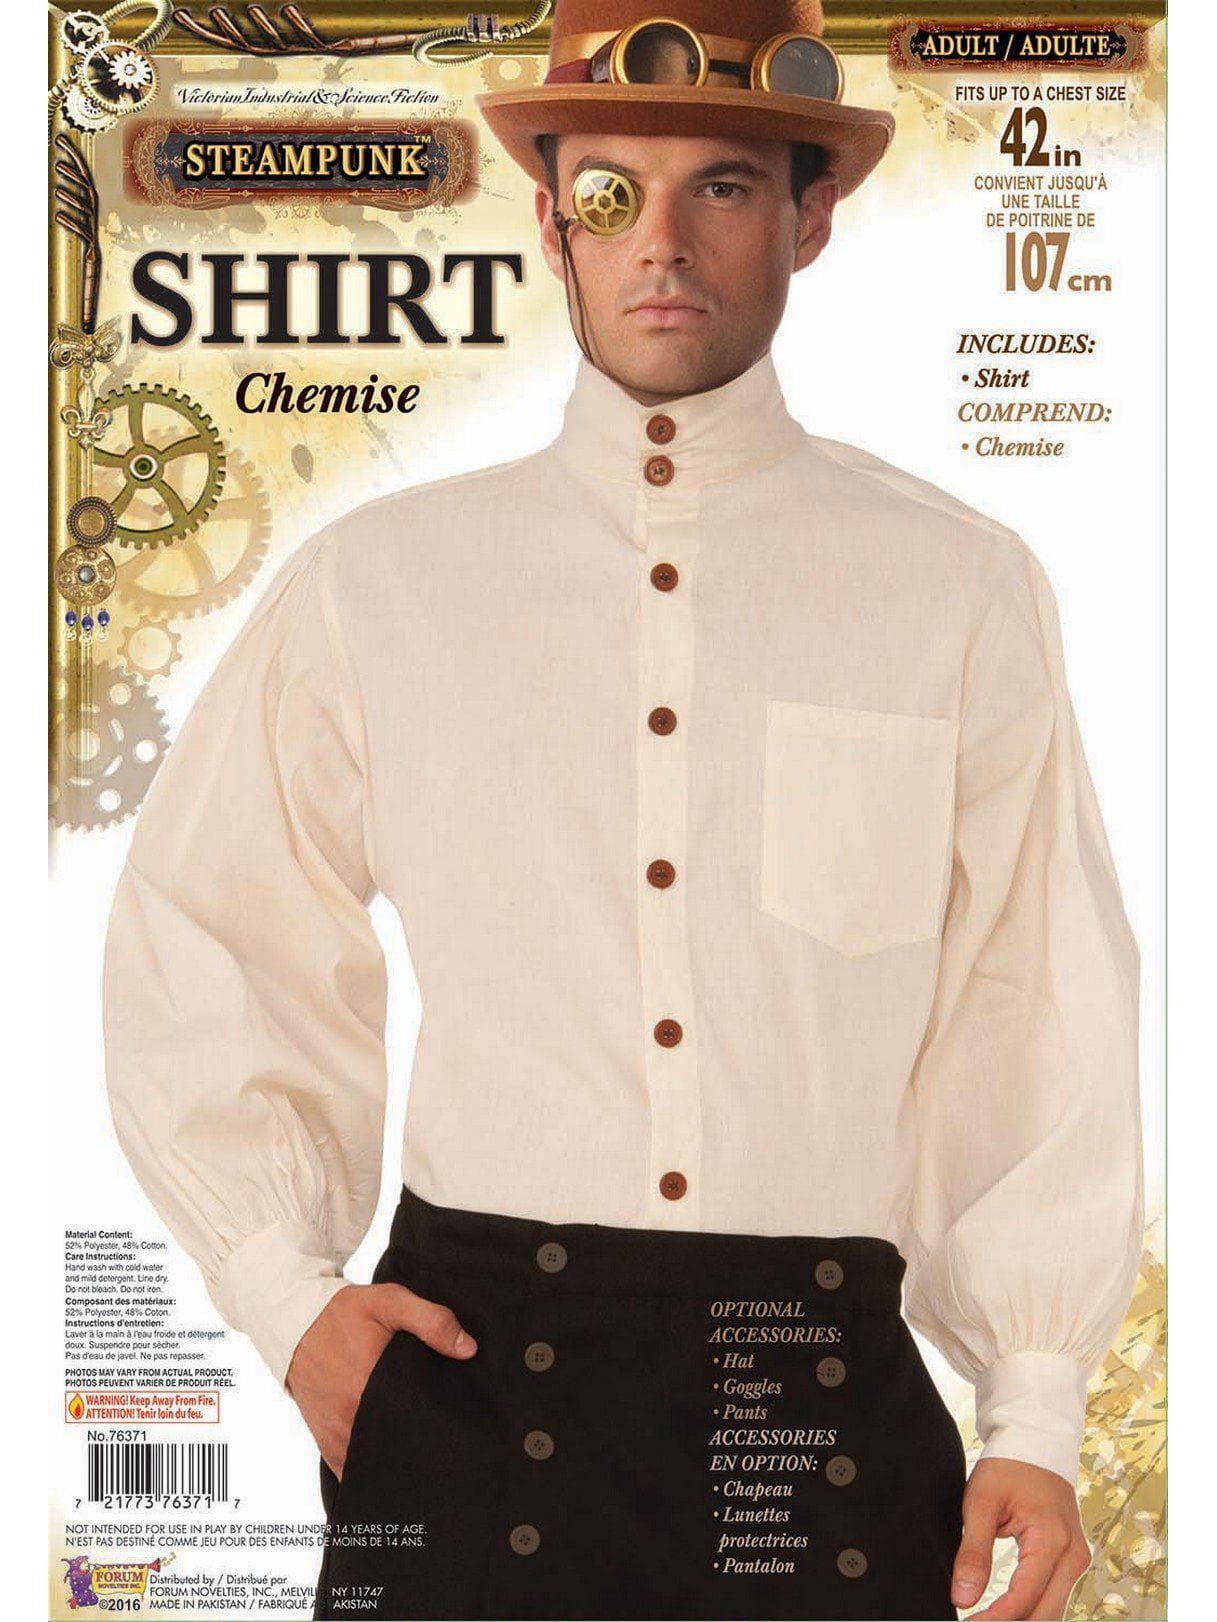 Adult Steampunk Shirt Beige Costume - costumes.com